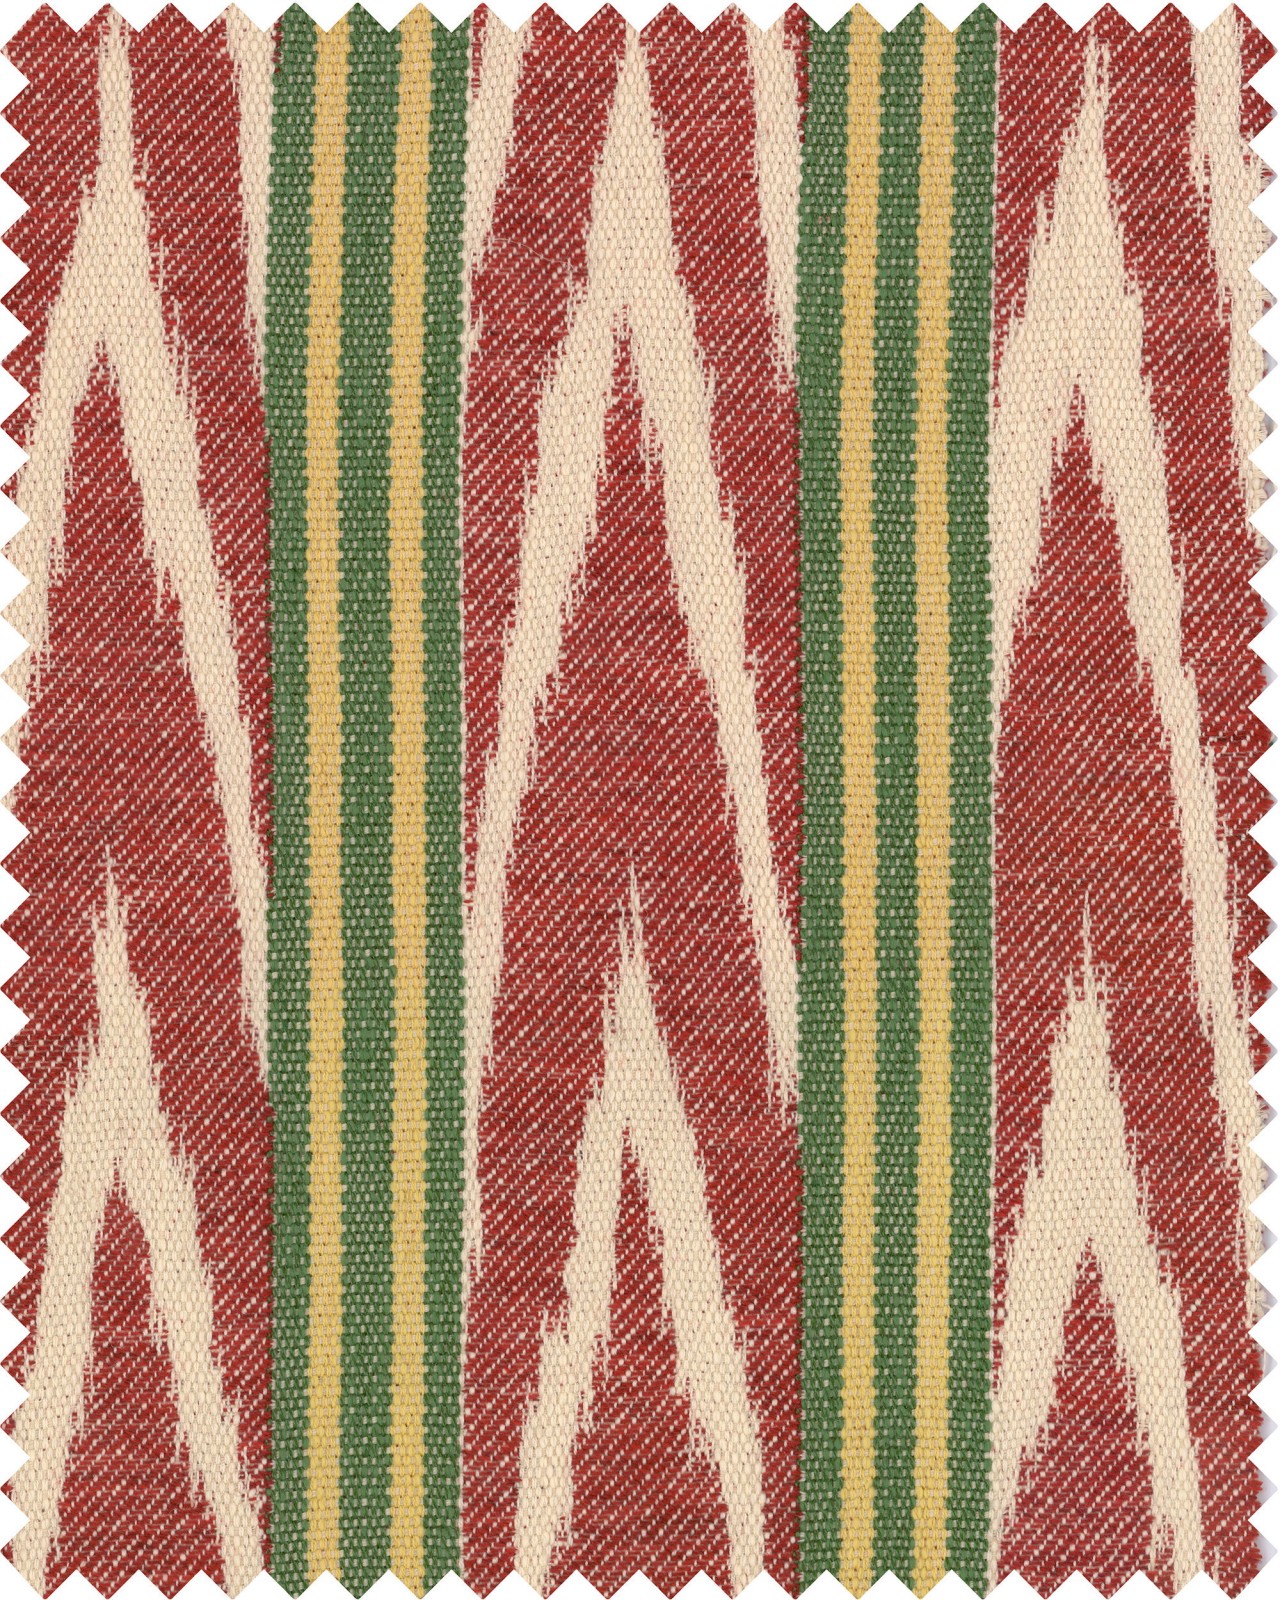 BAKHMAL IKAT Woven Fabric